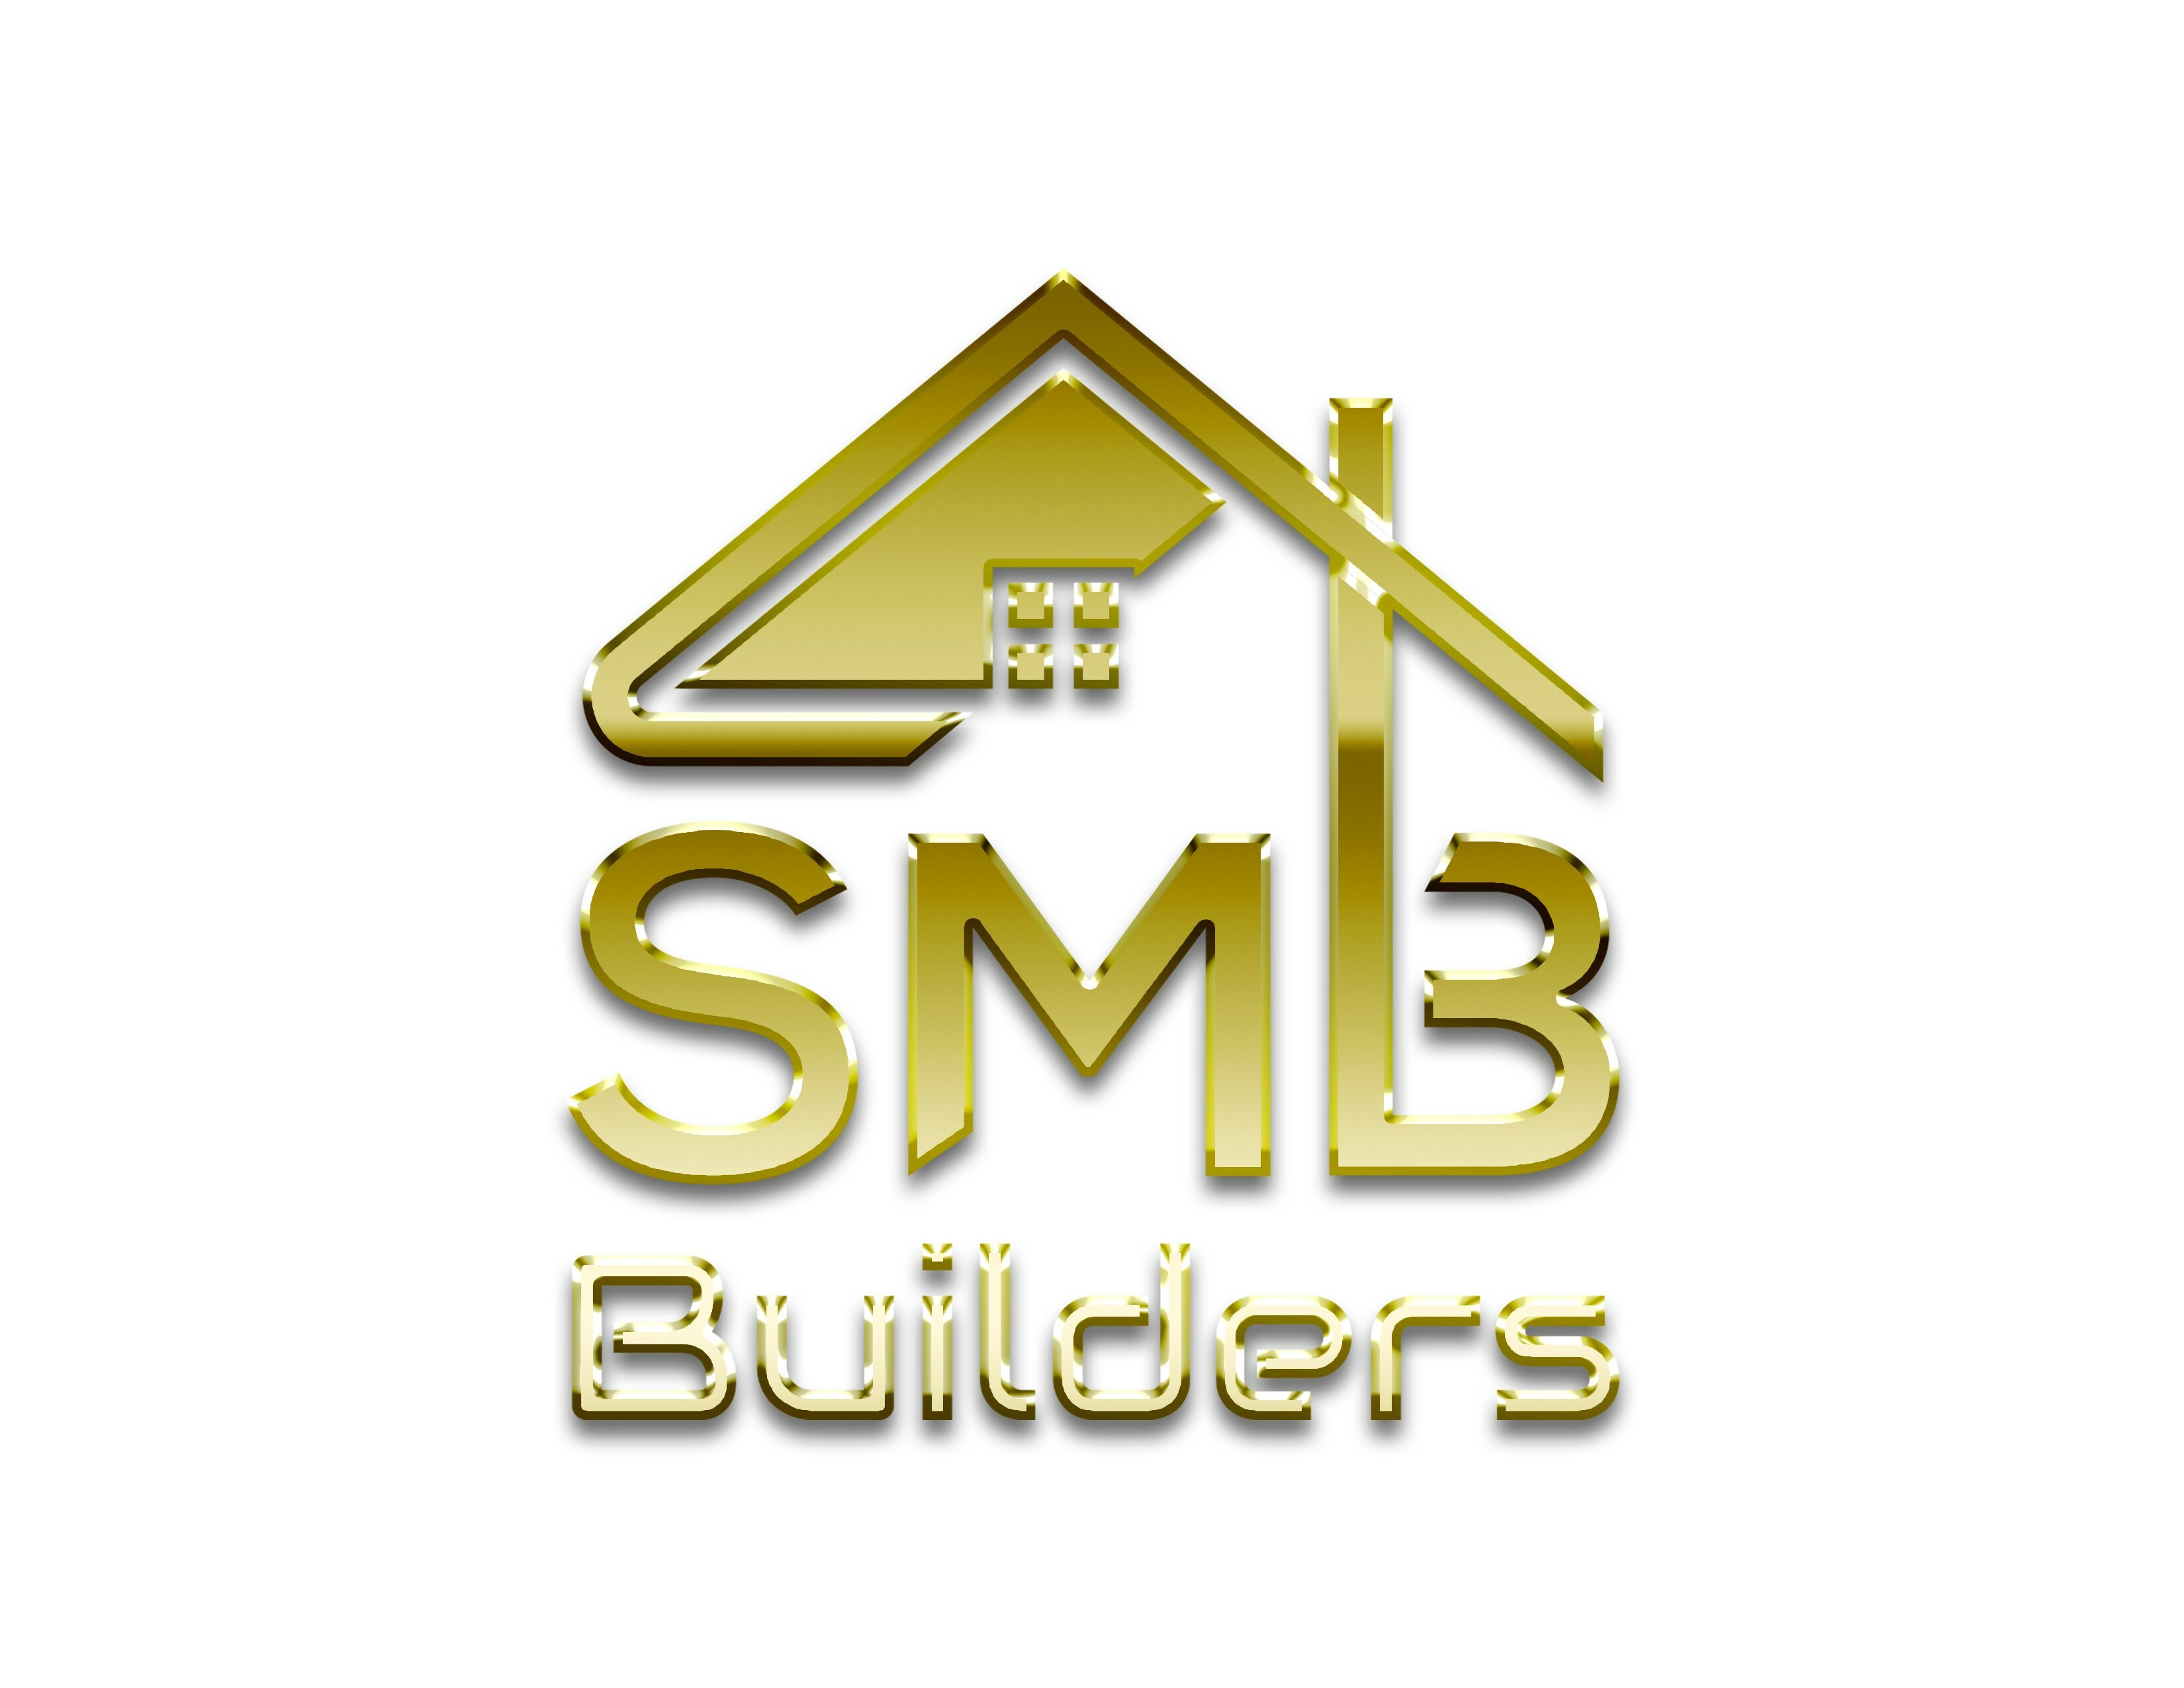 SMB Builders's logo